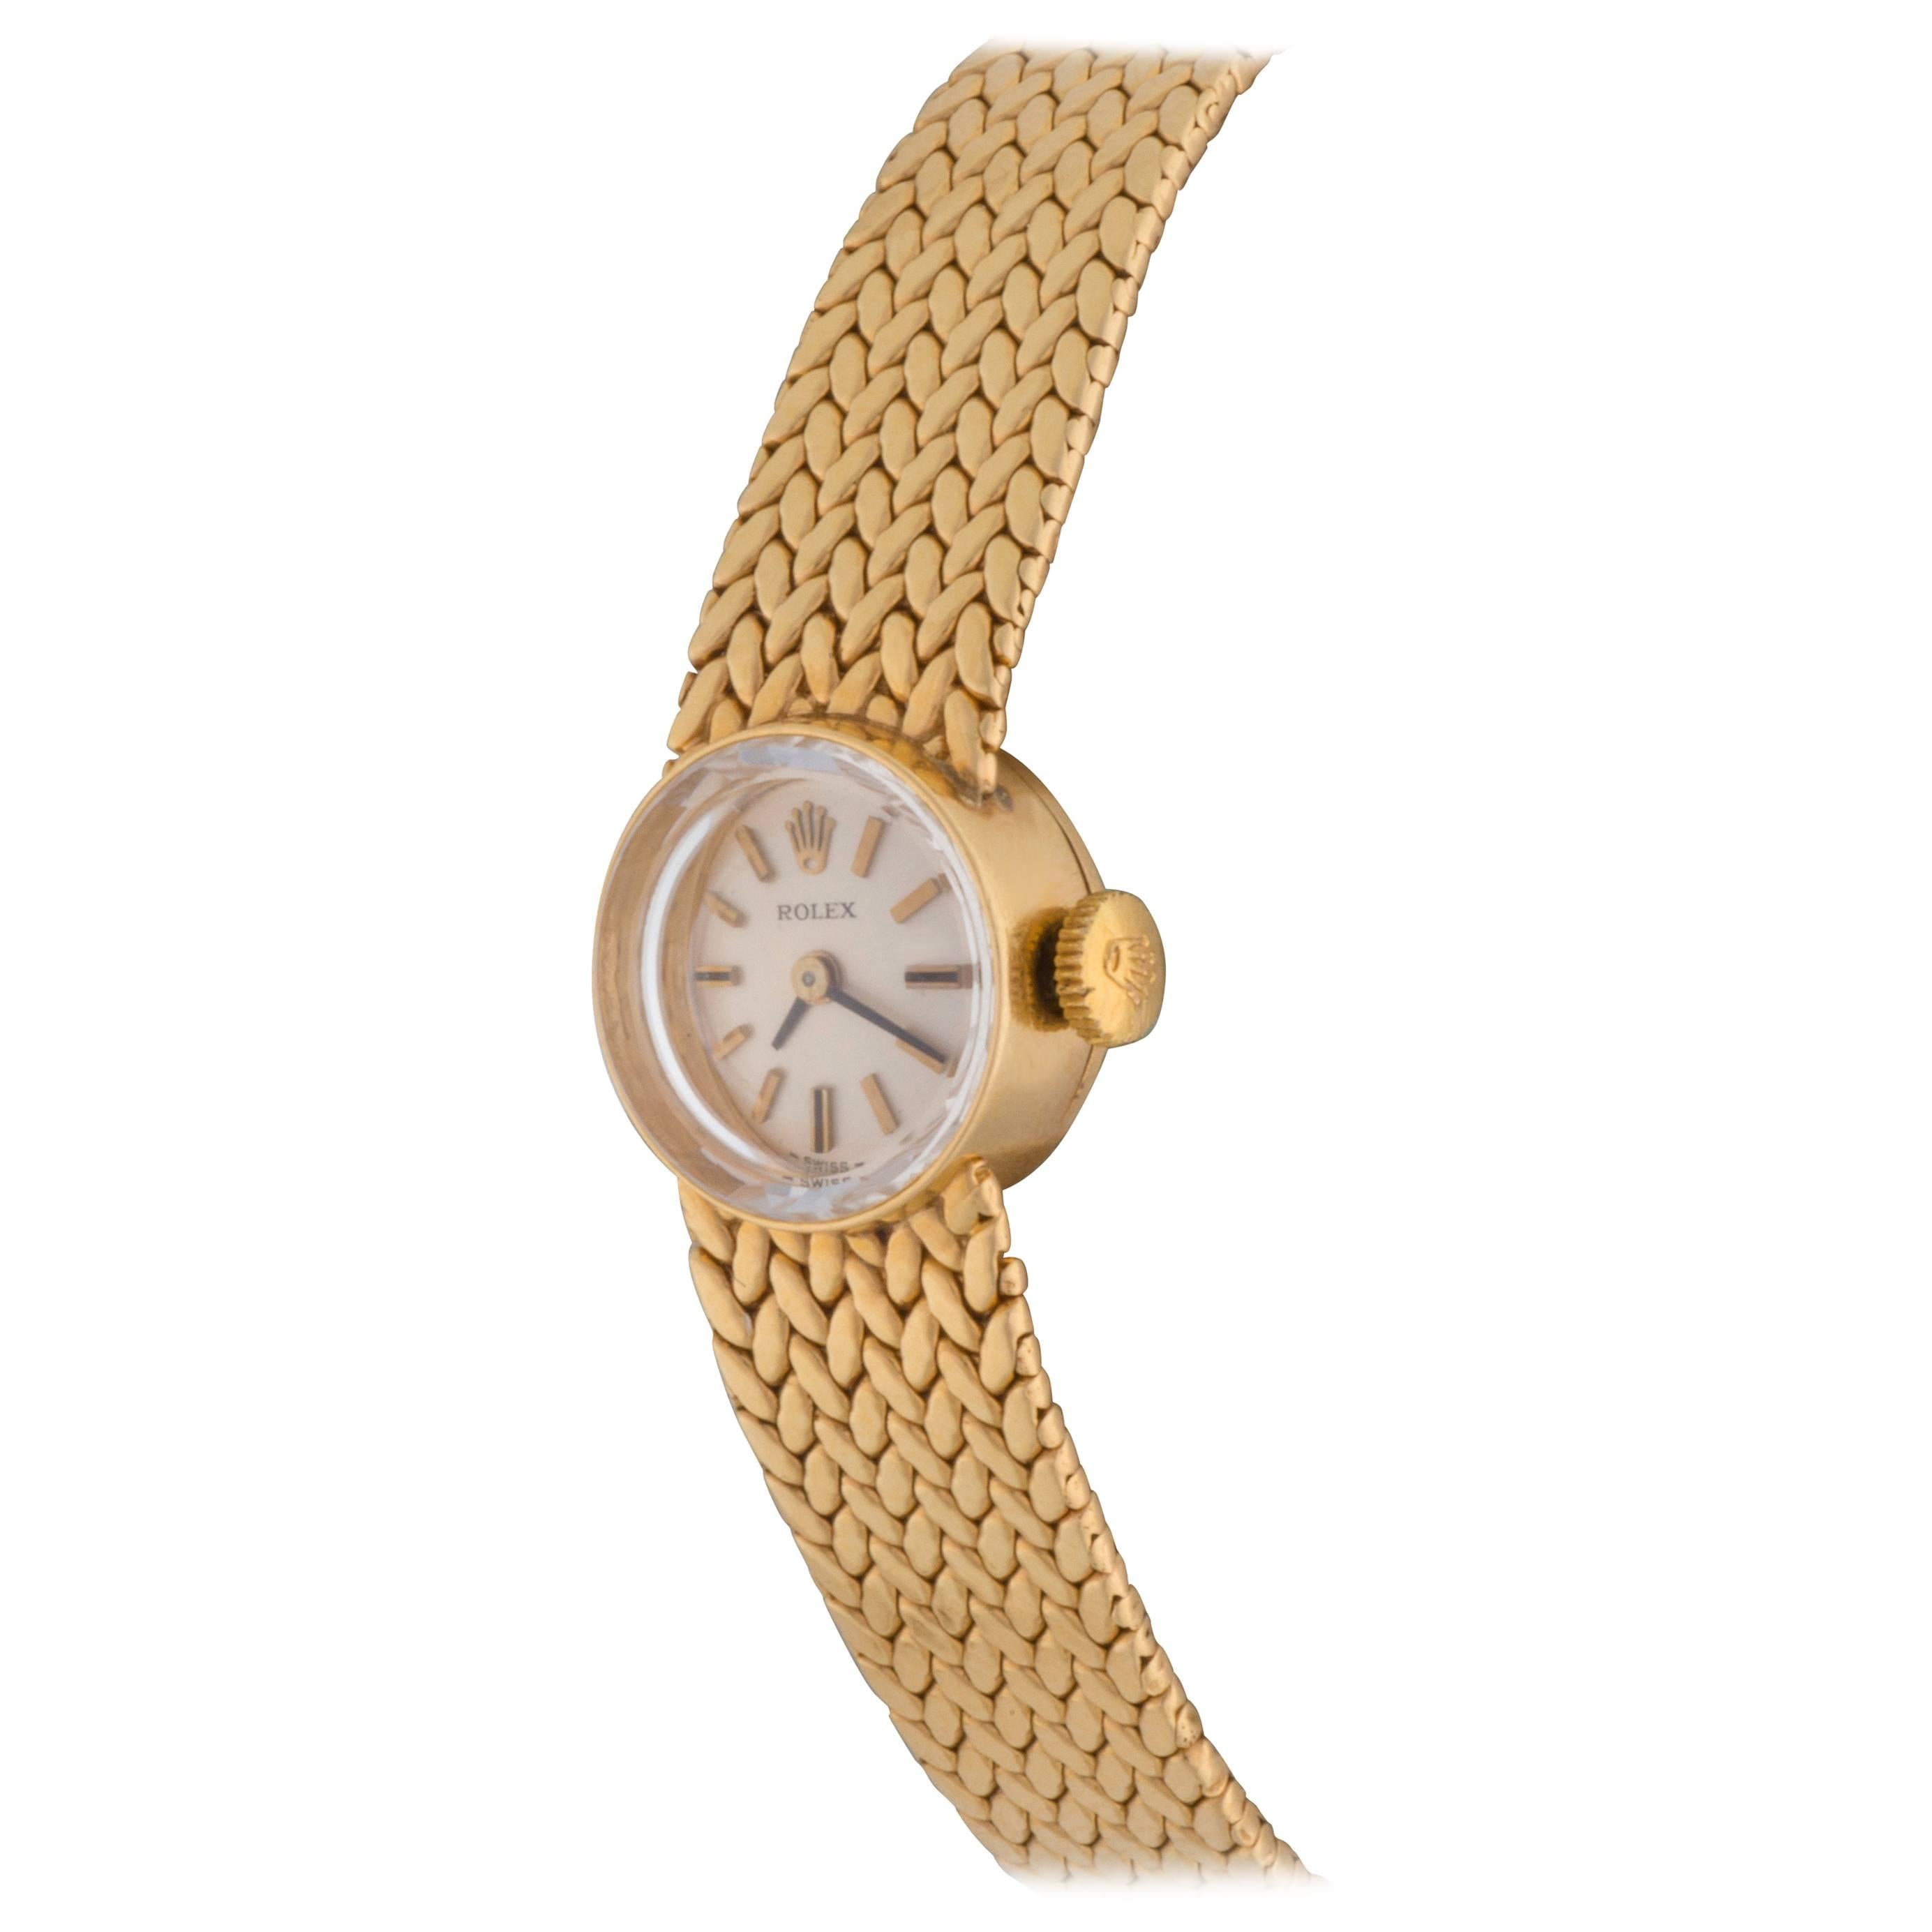 Rolex Ladies Yellow Gold Vintage Manual Wristwatch Ref 9656 